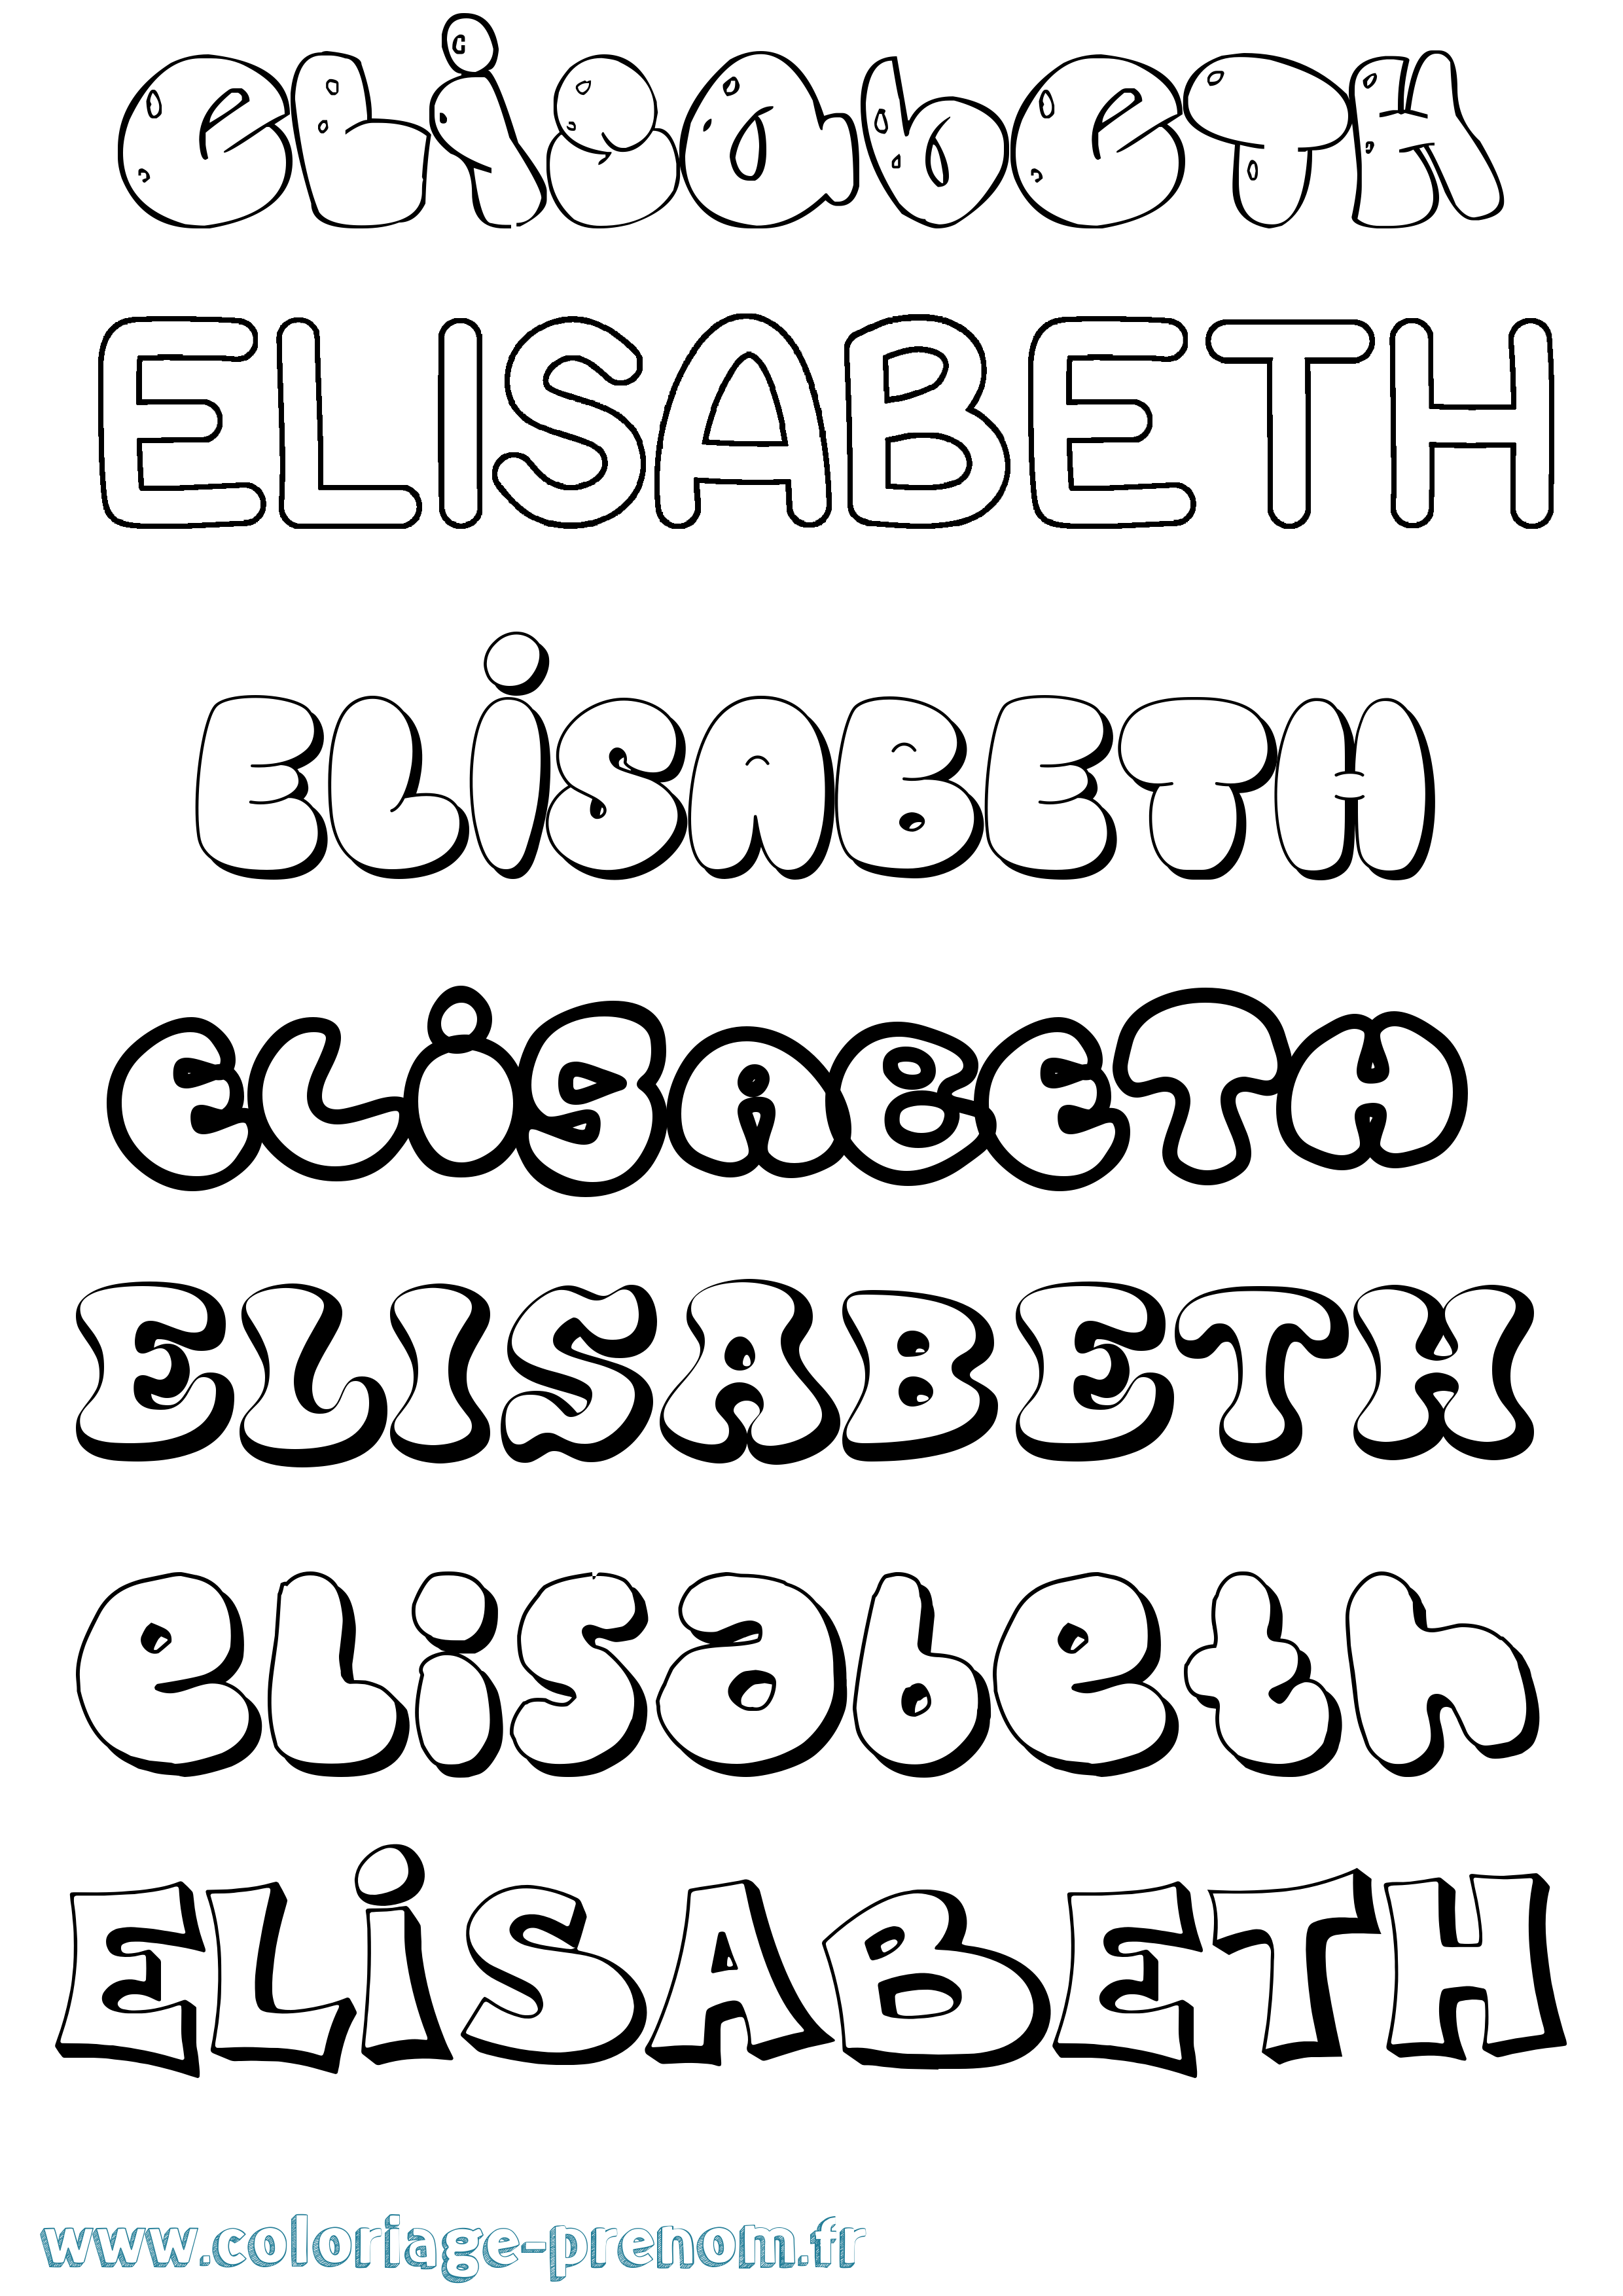 Coloriage prénom Elisabeth Bubble